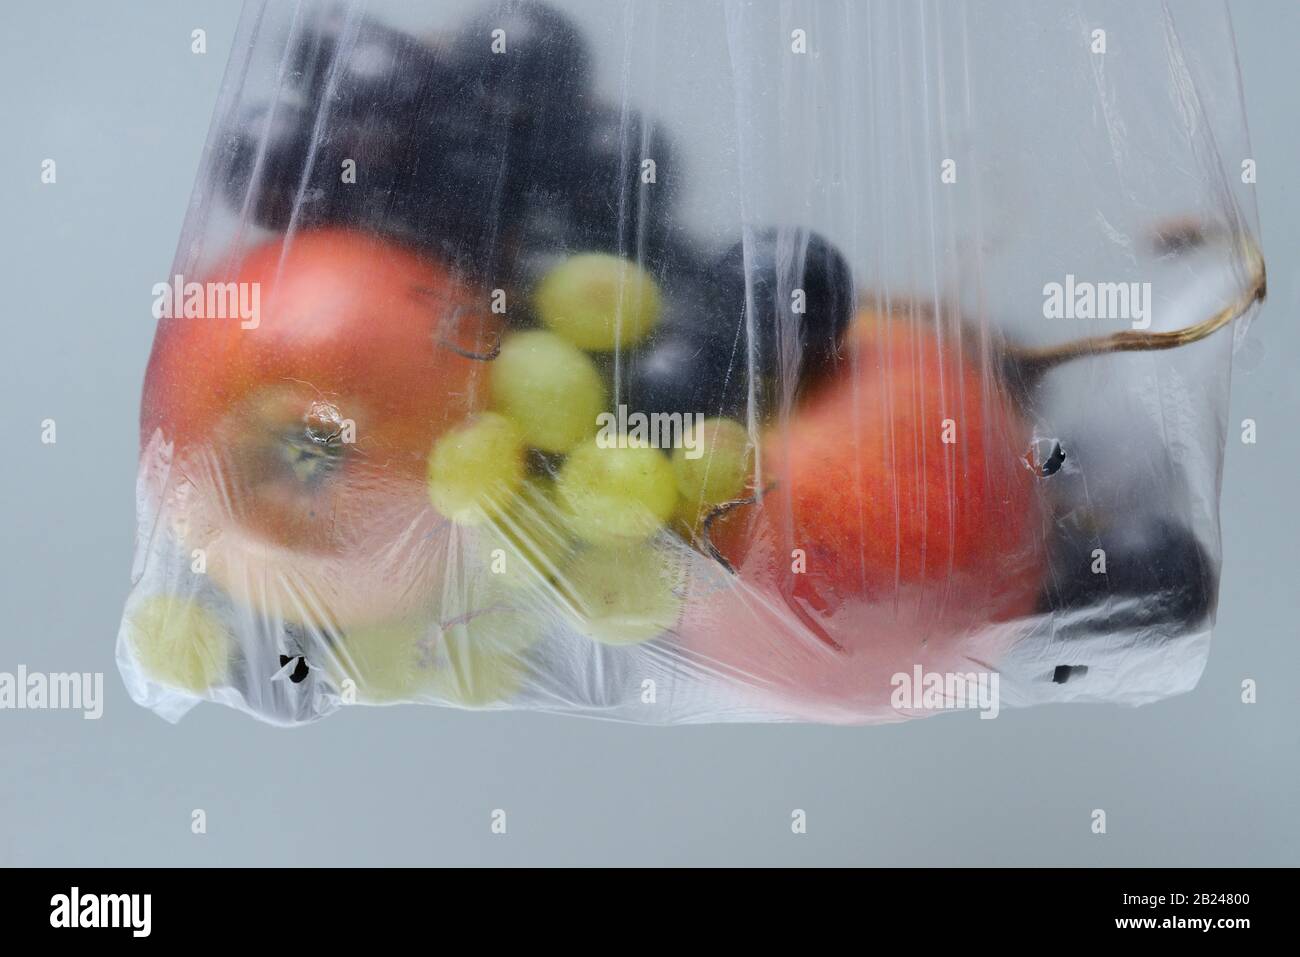 Fruit in plastic bag, Germany Stock Photo